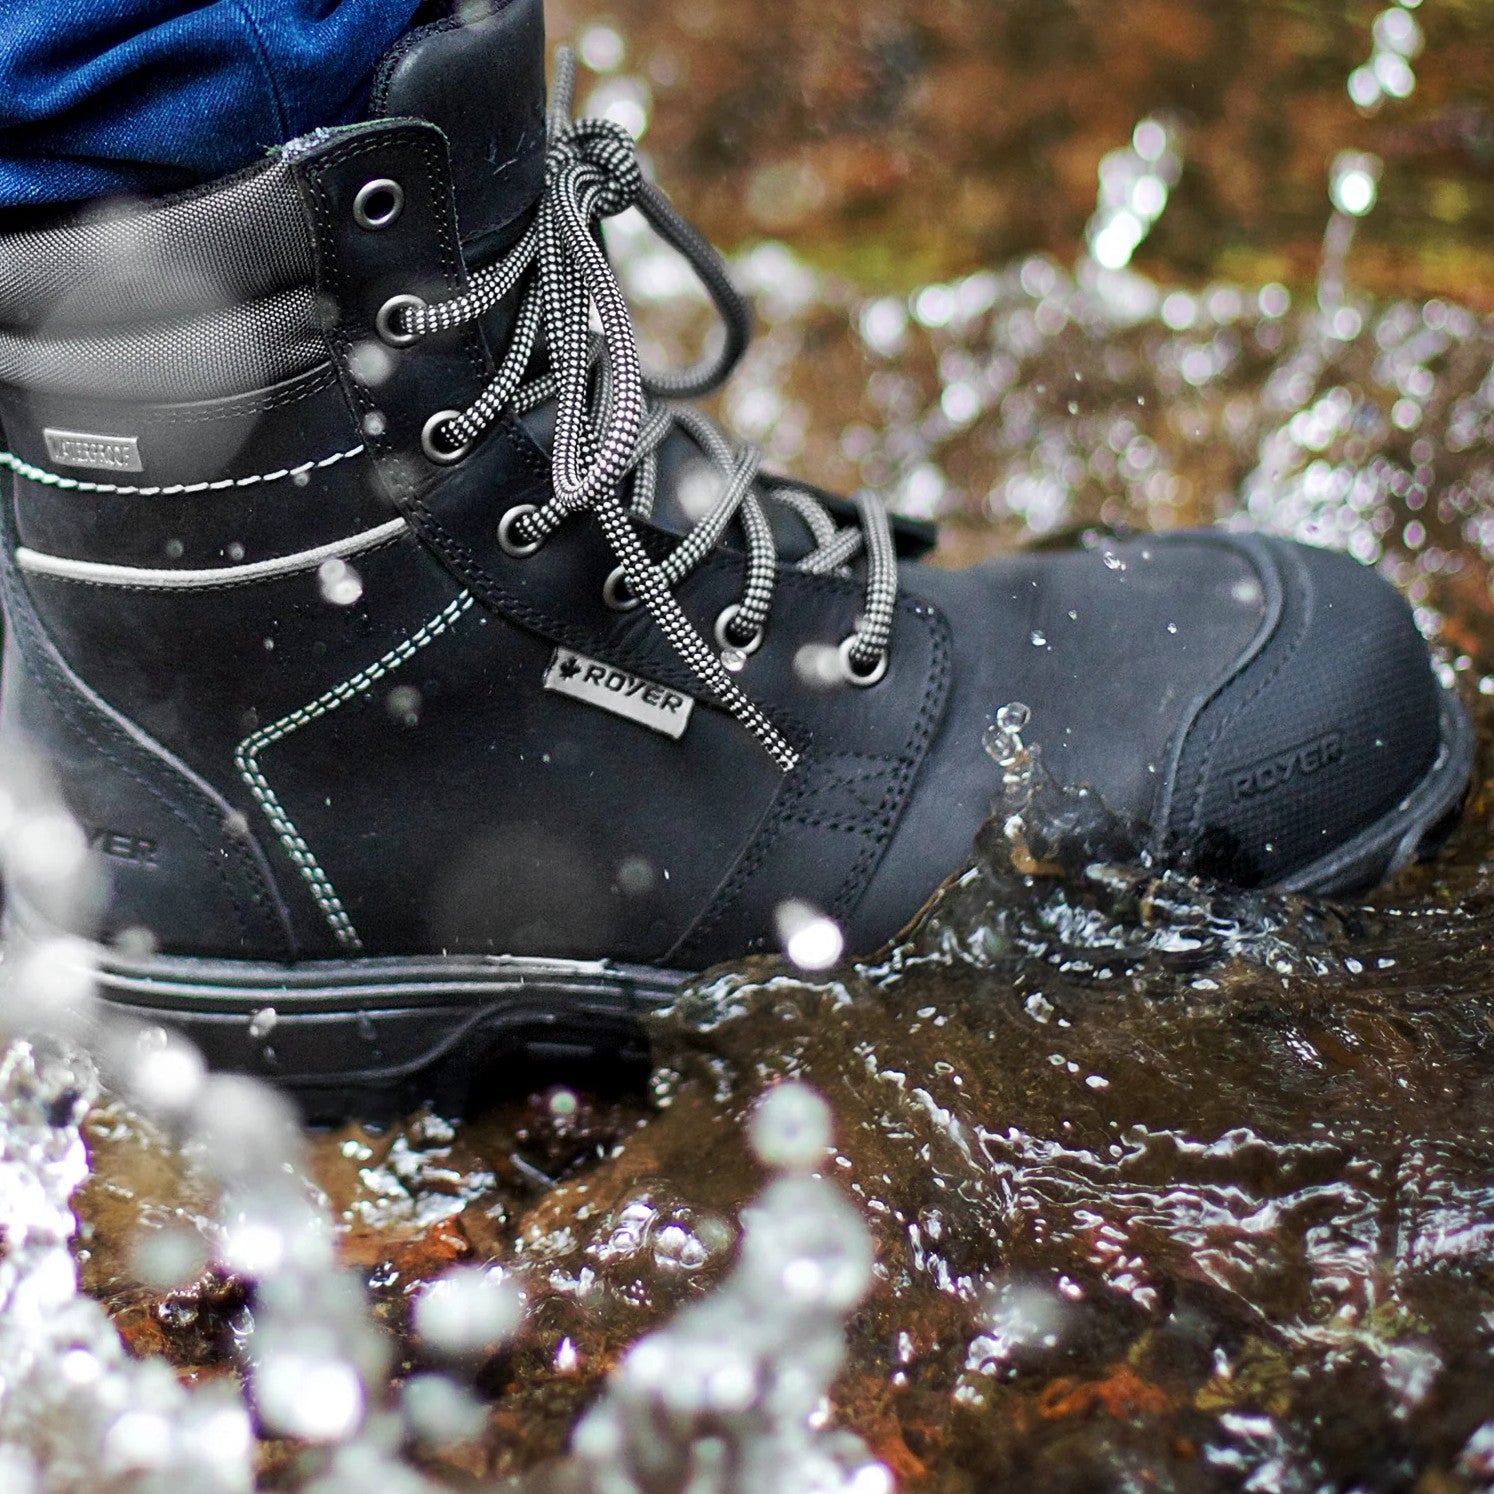 Water-resistant boots VS waterproof membrane